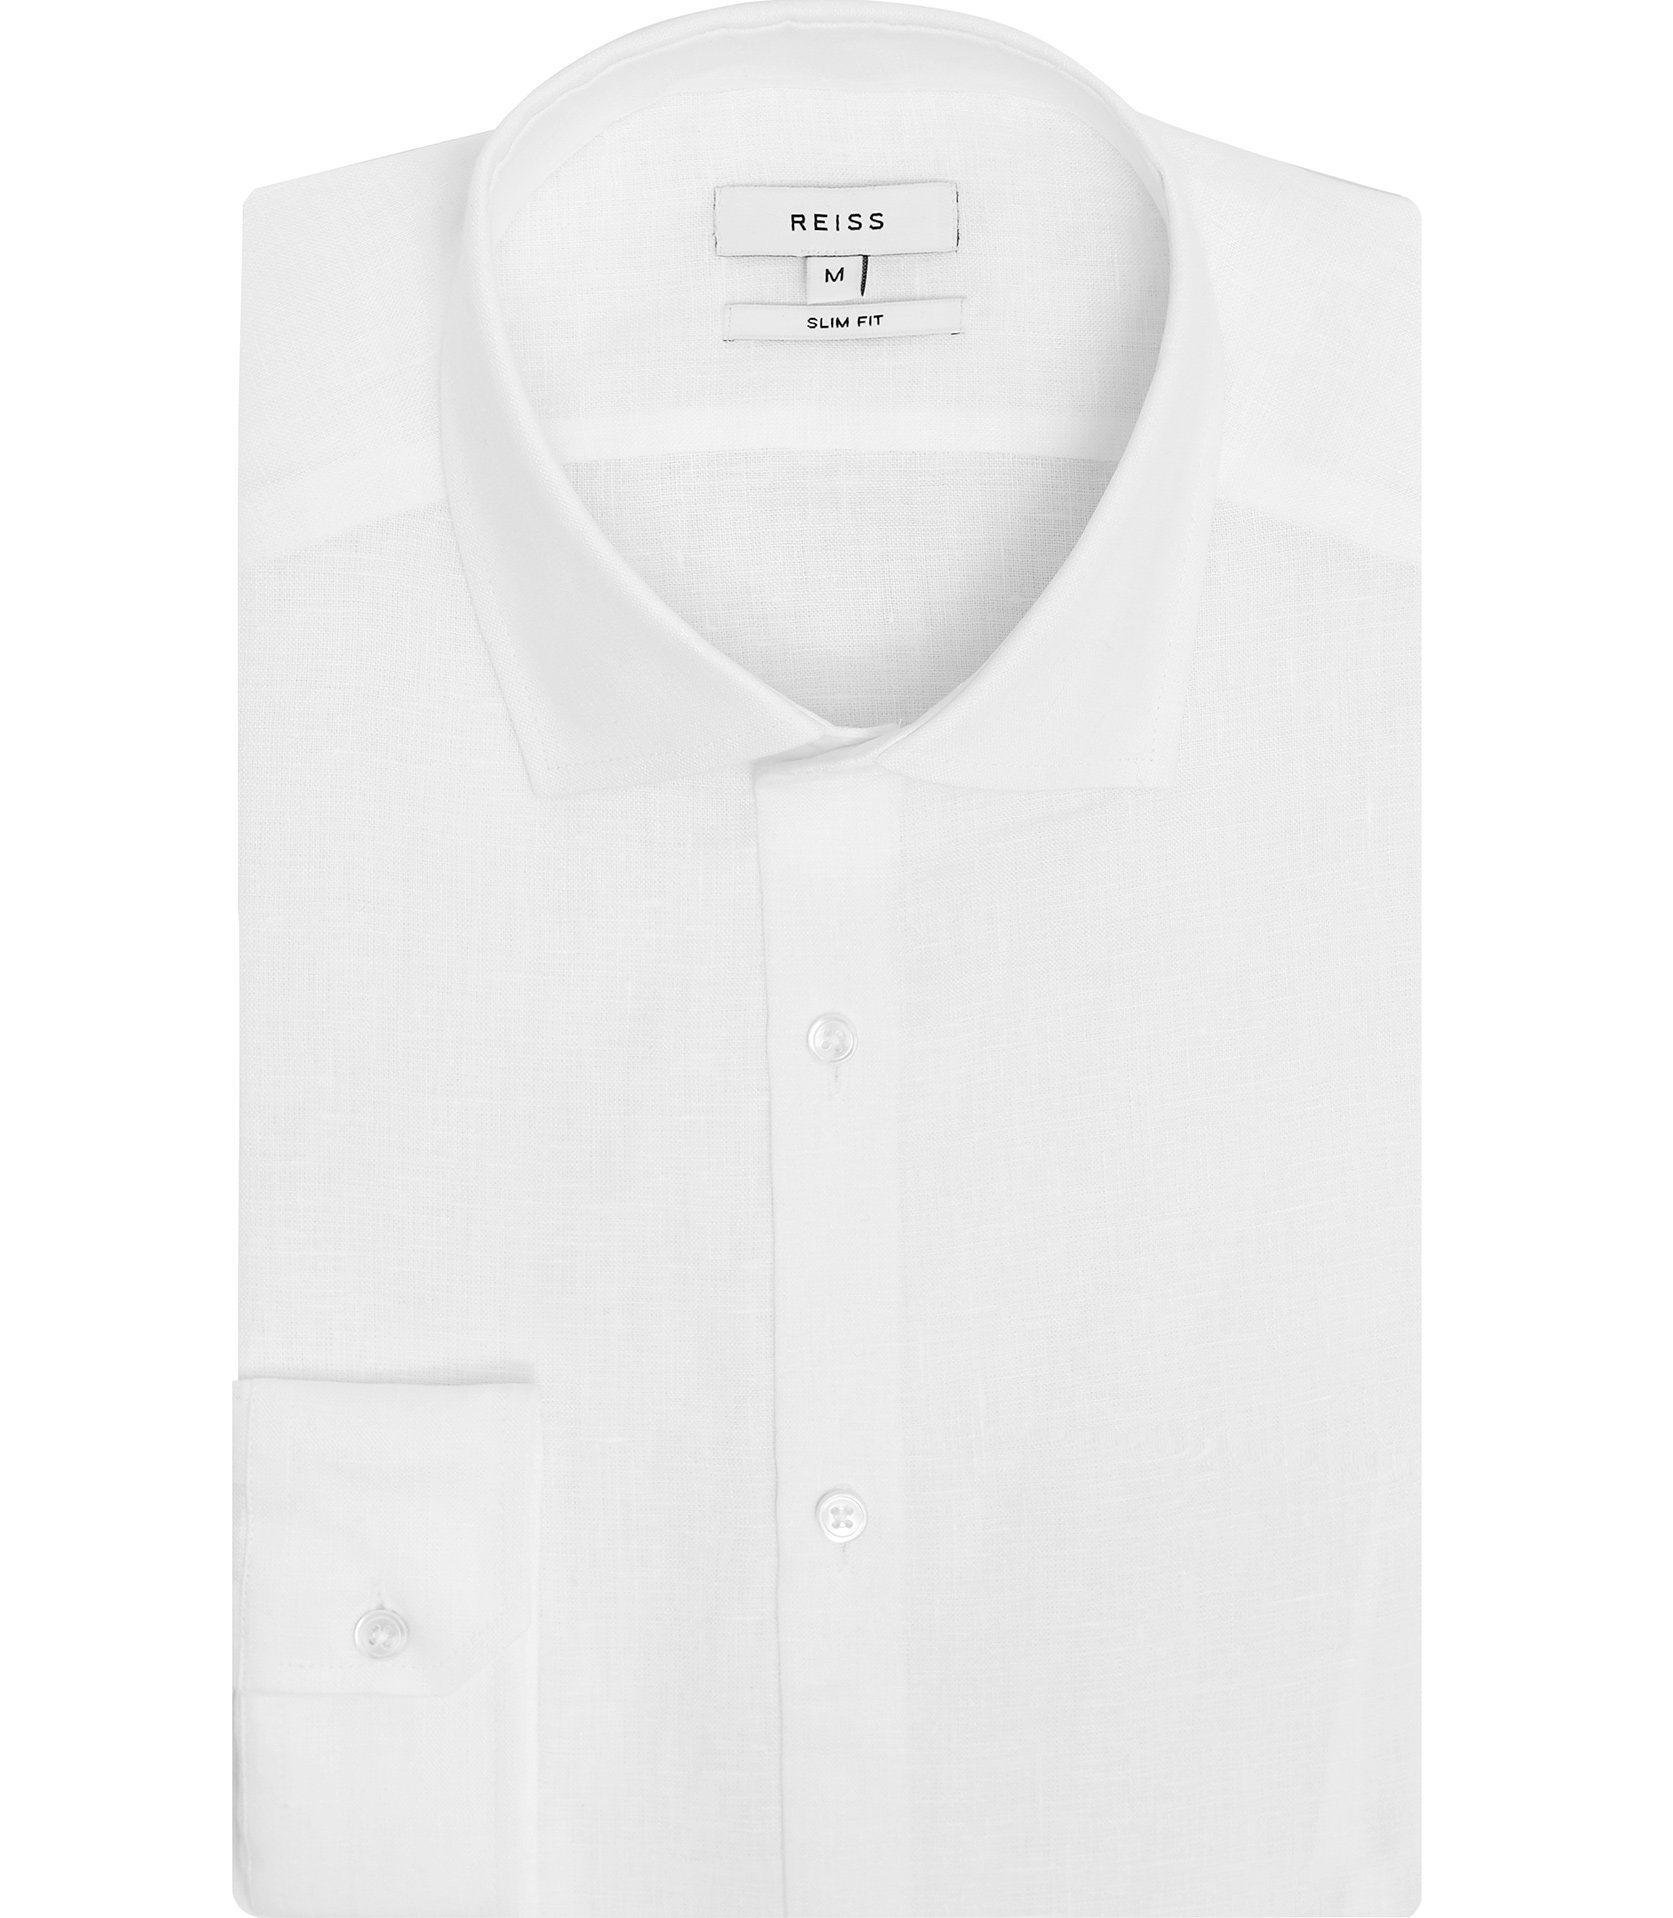 REISS White Linen Shirt